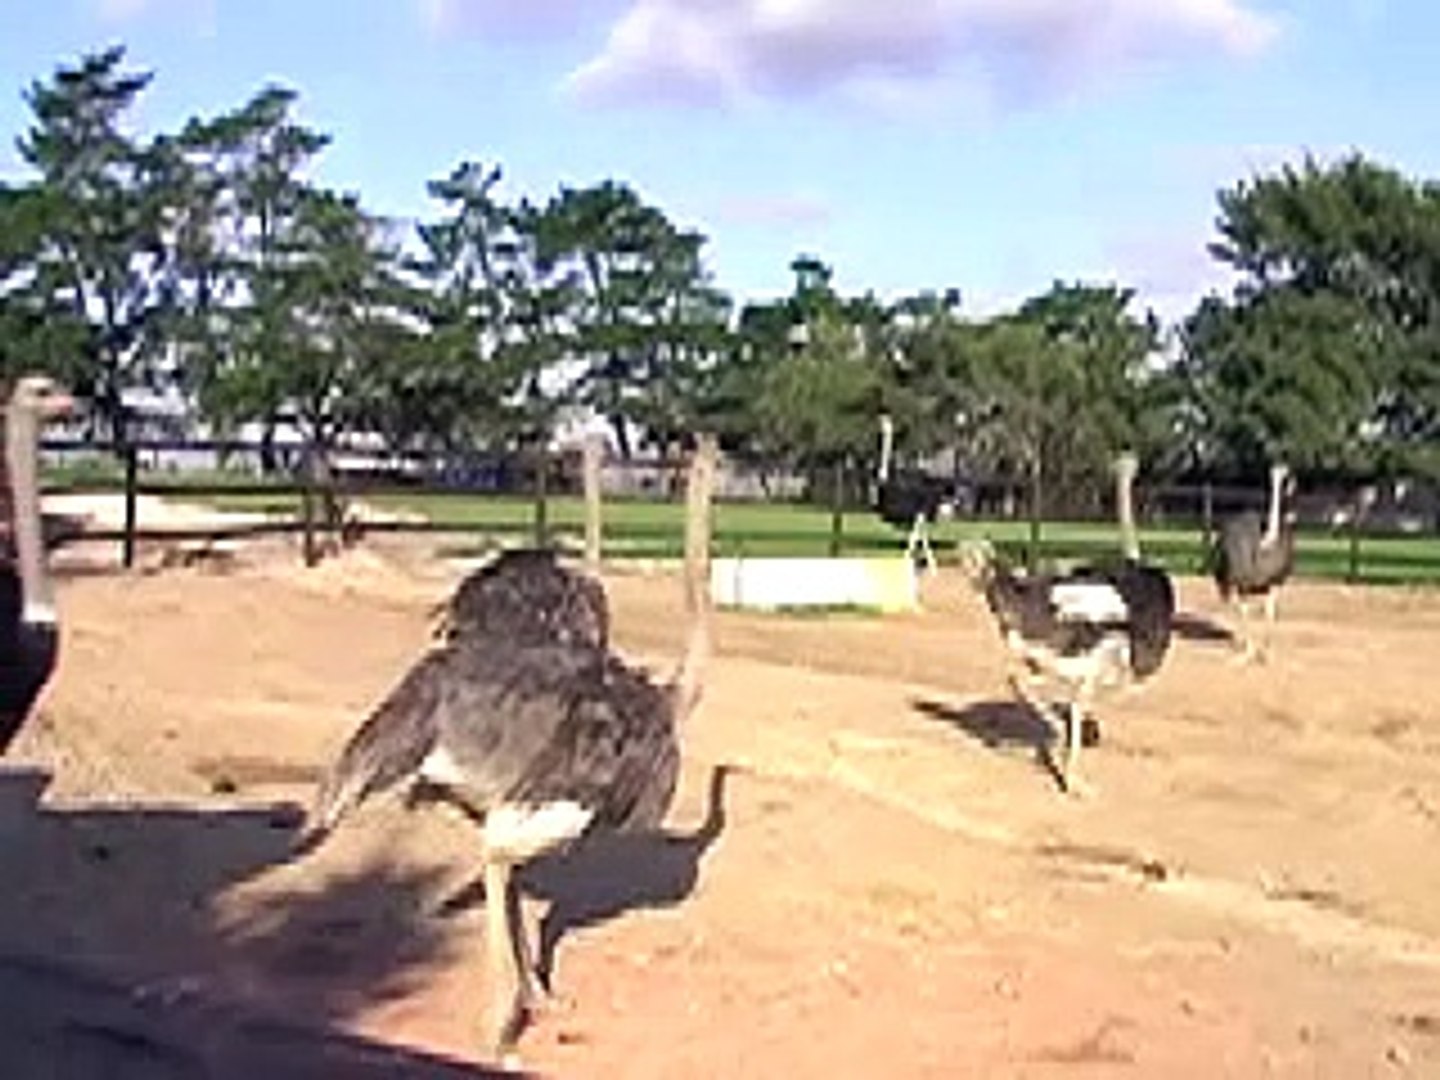 South Africa-Cape Town-West Coast Ostrich Farm